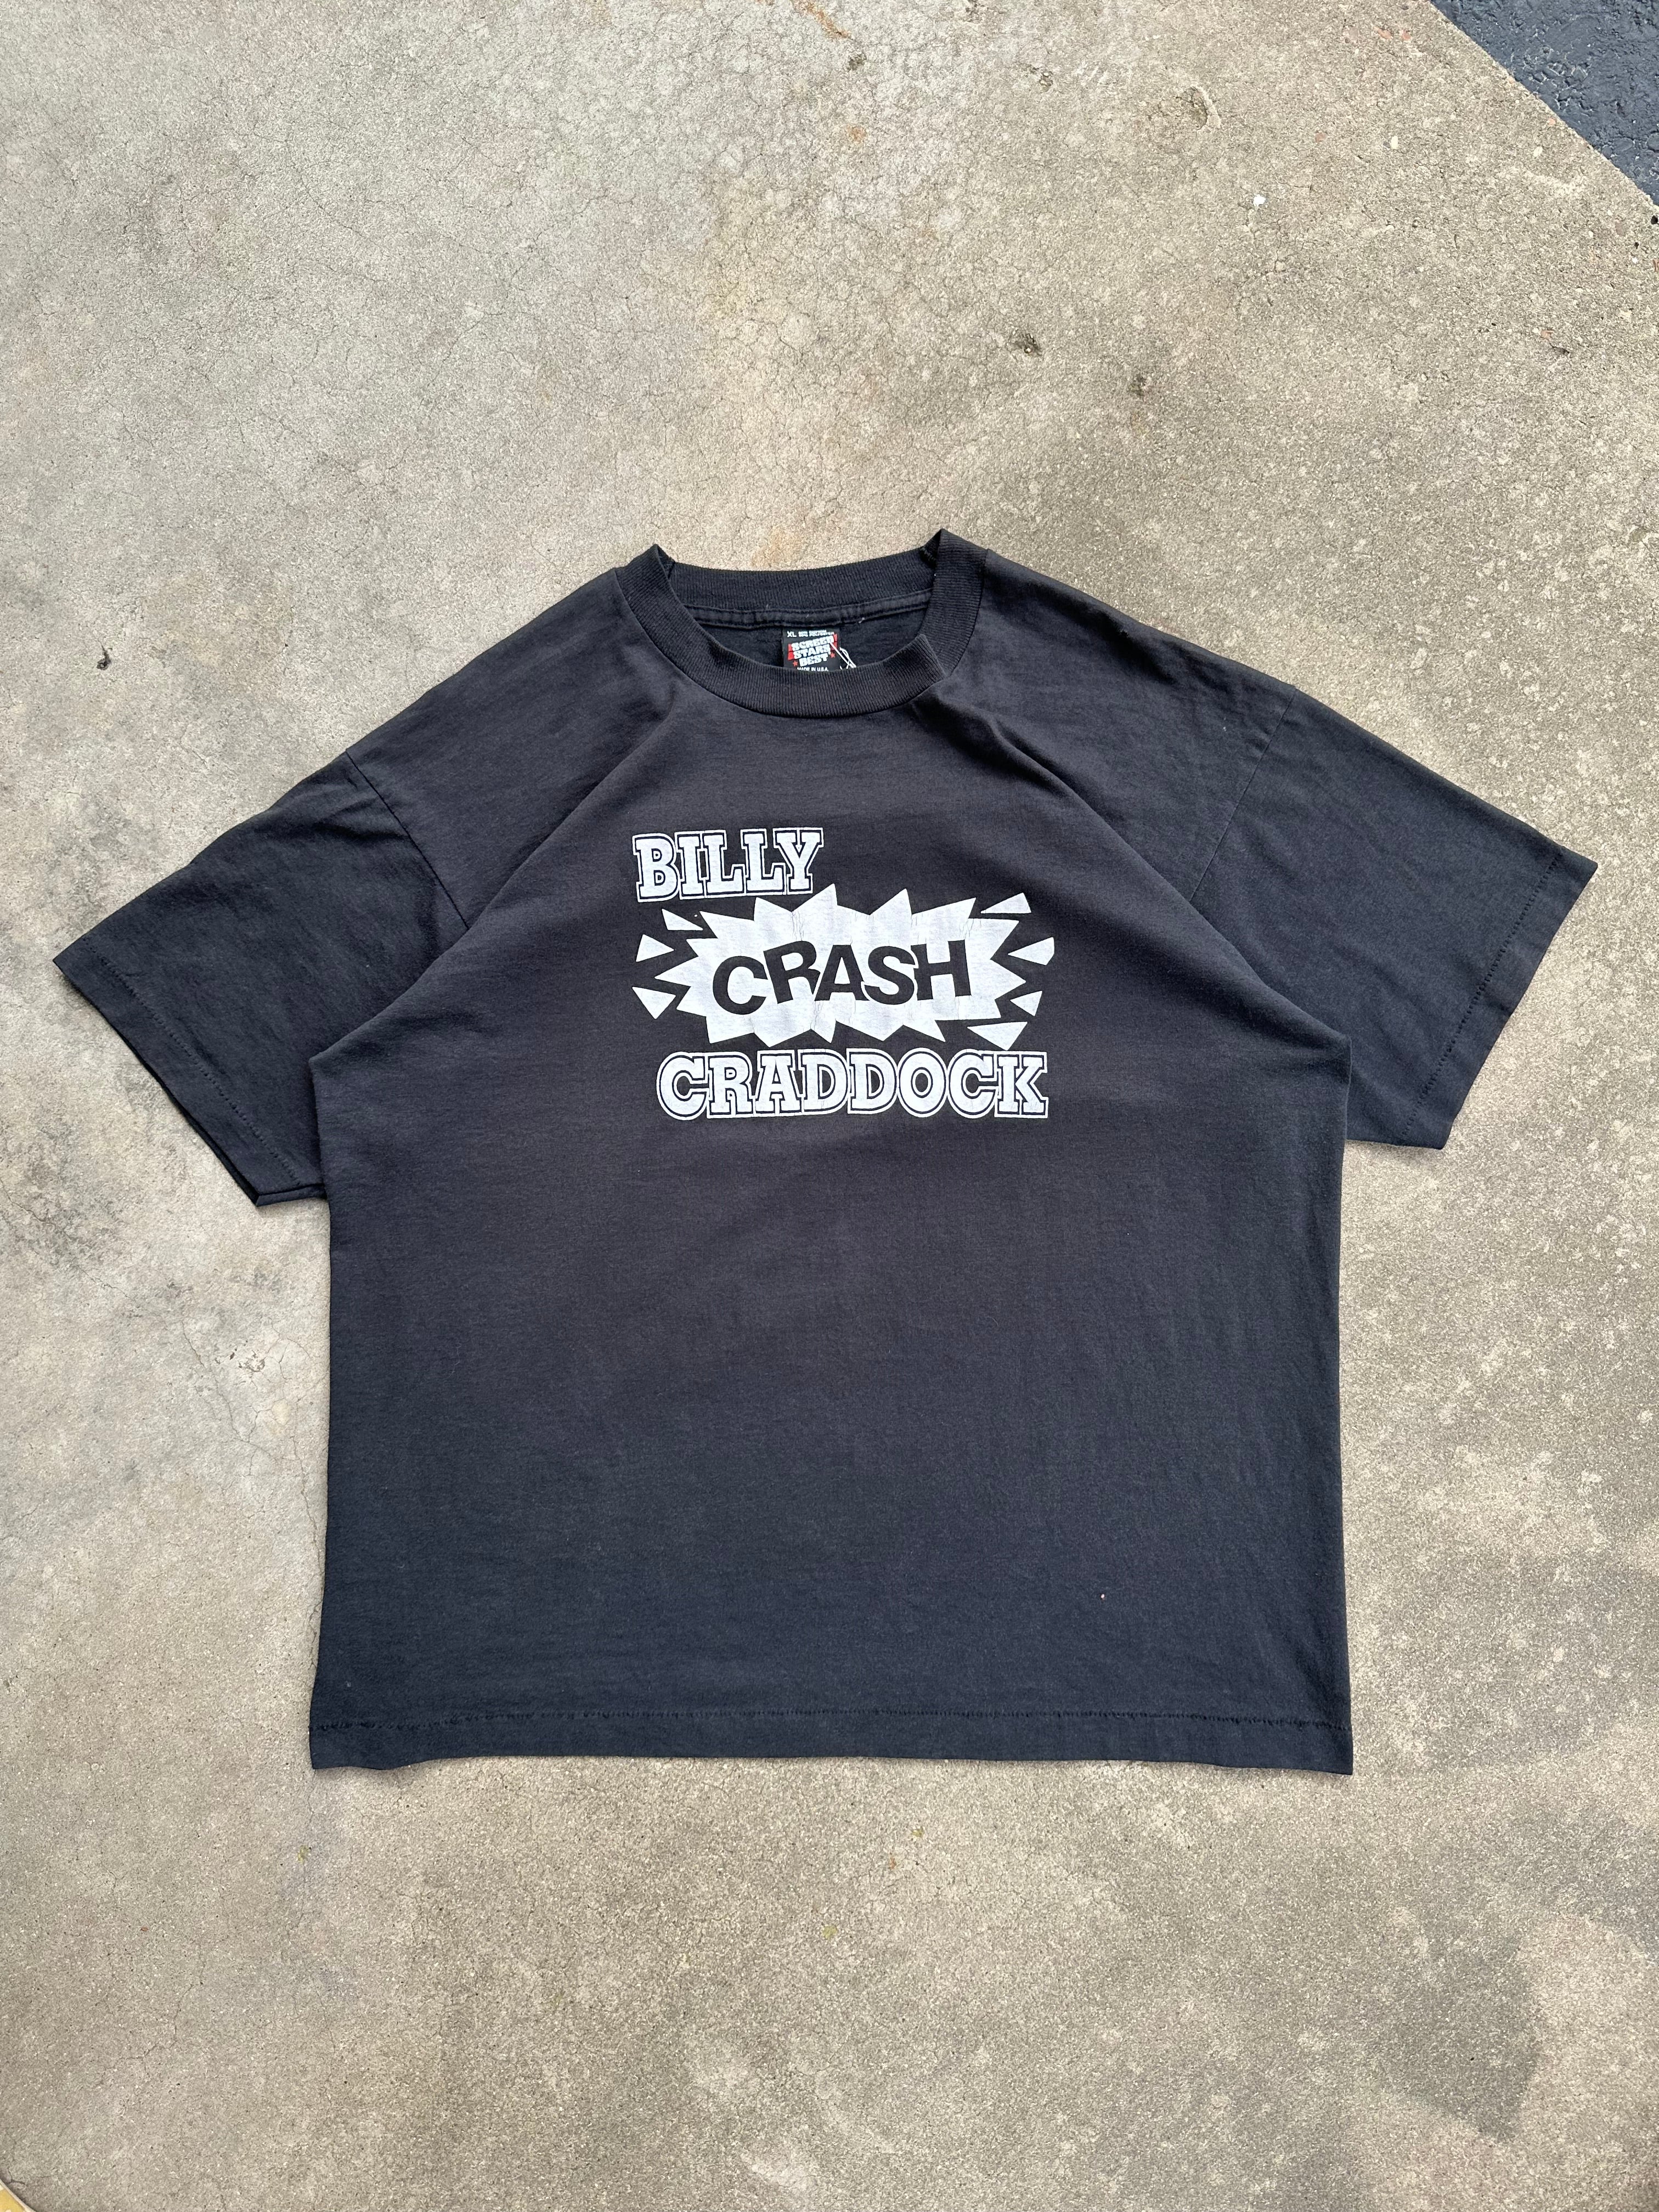 1990s Billy Crash Craddock T-Shirt (L/XL)